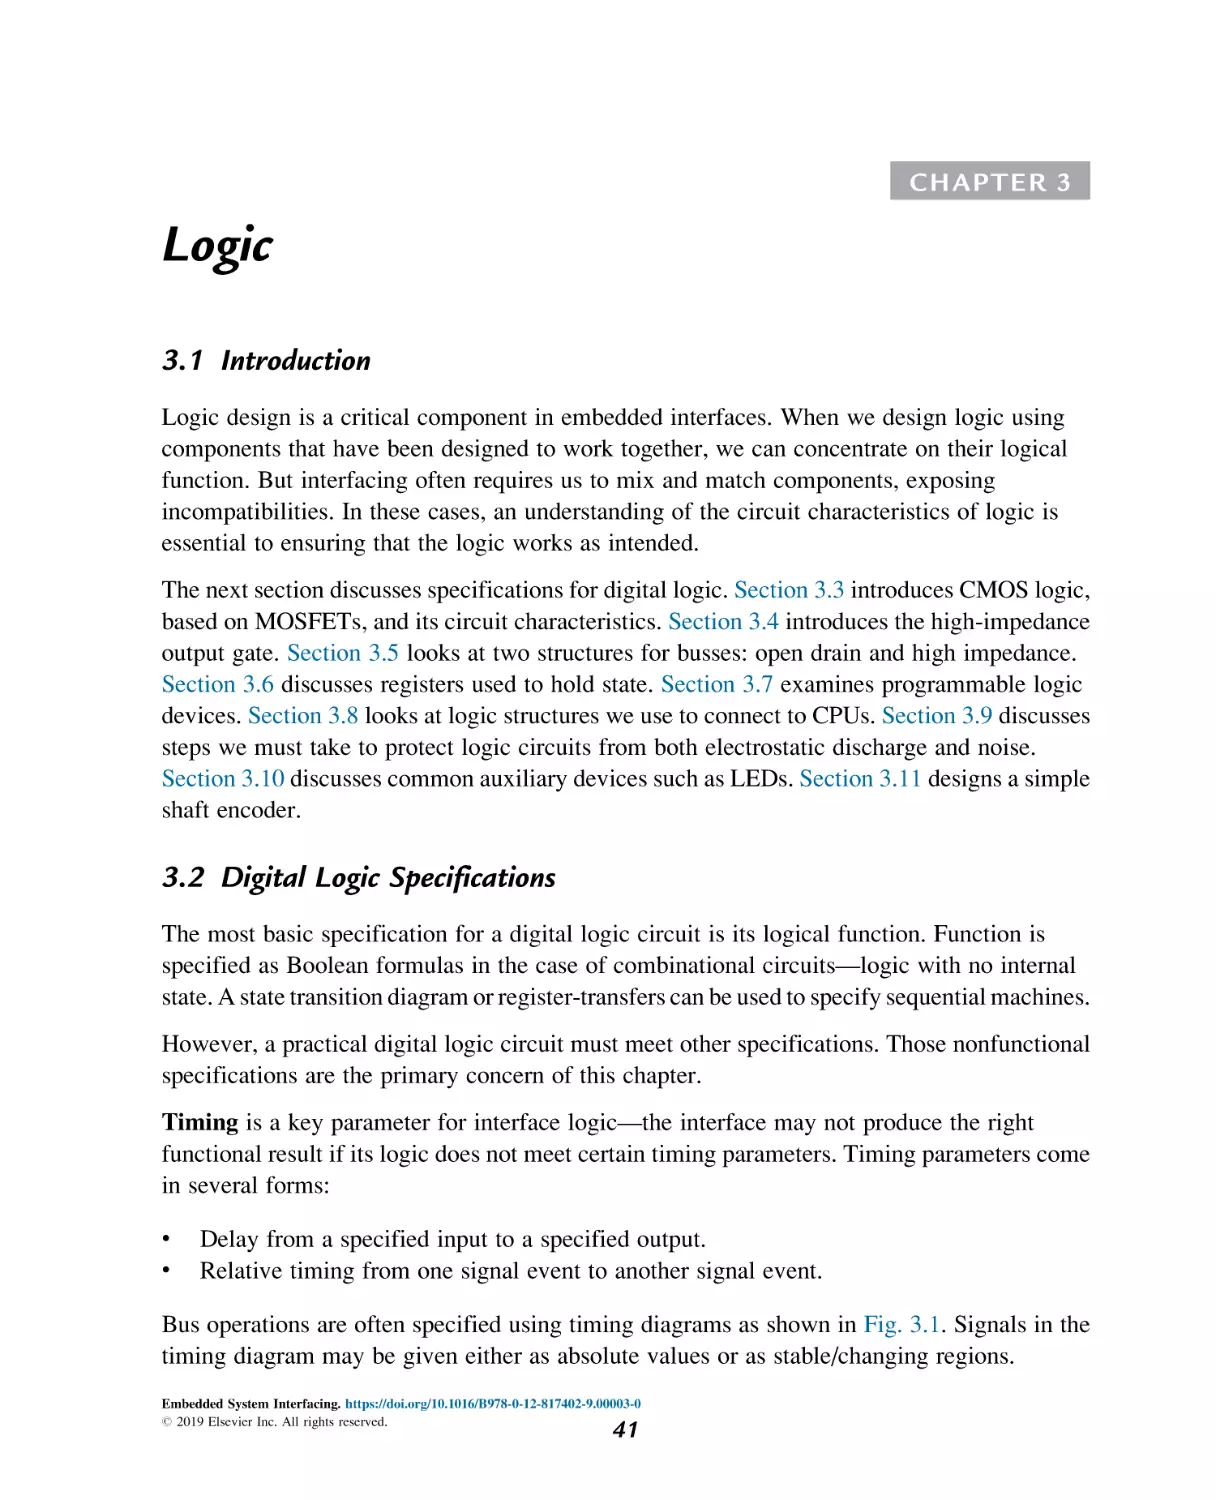 3
Logic
Introduction
Digital Logic Specifications